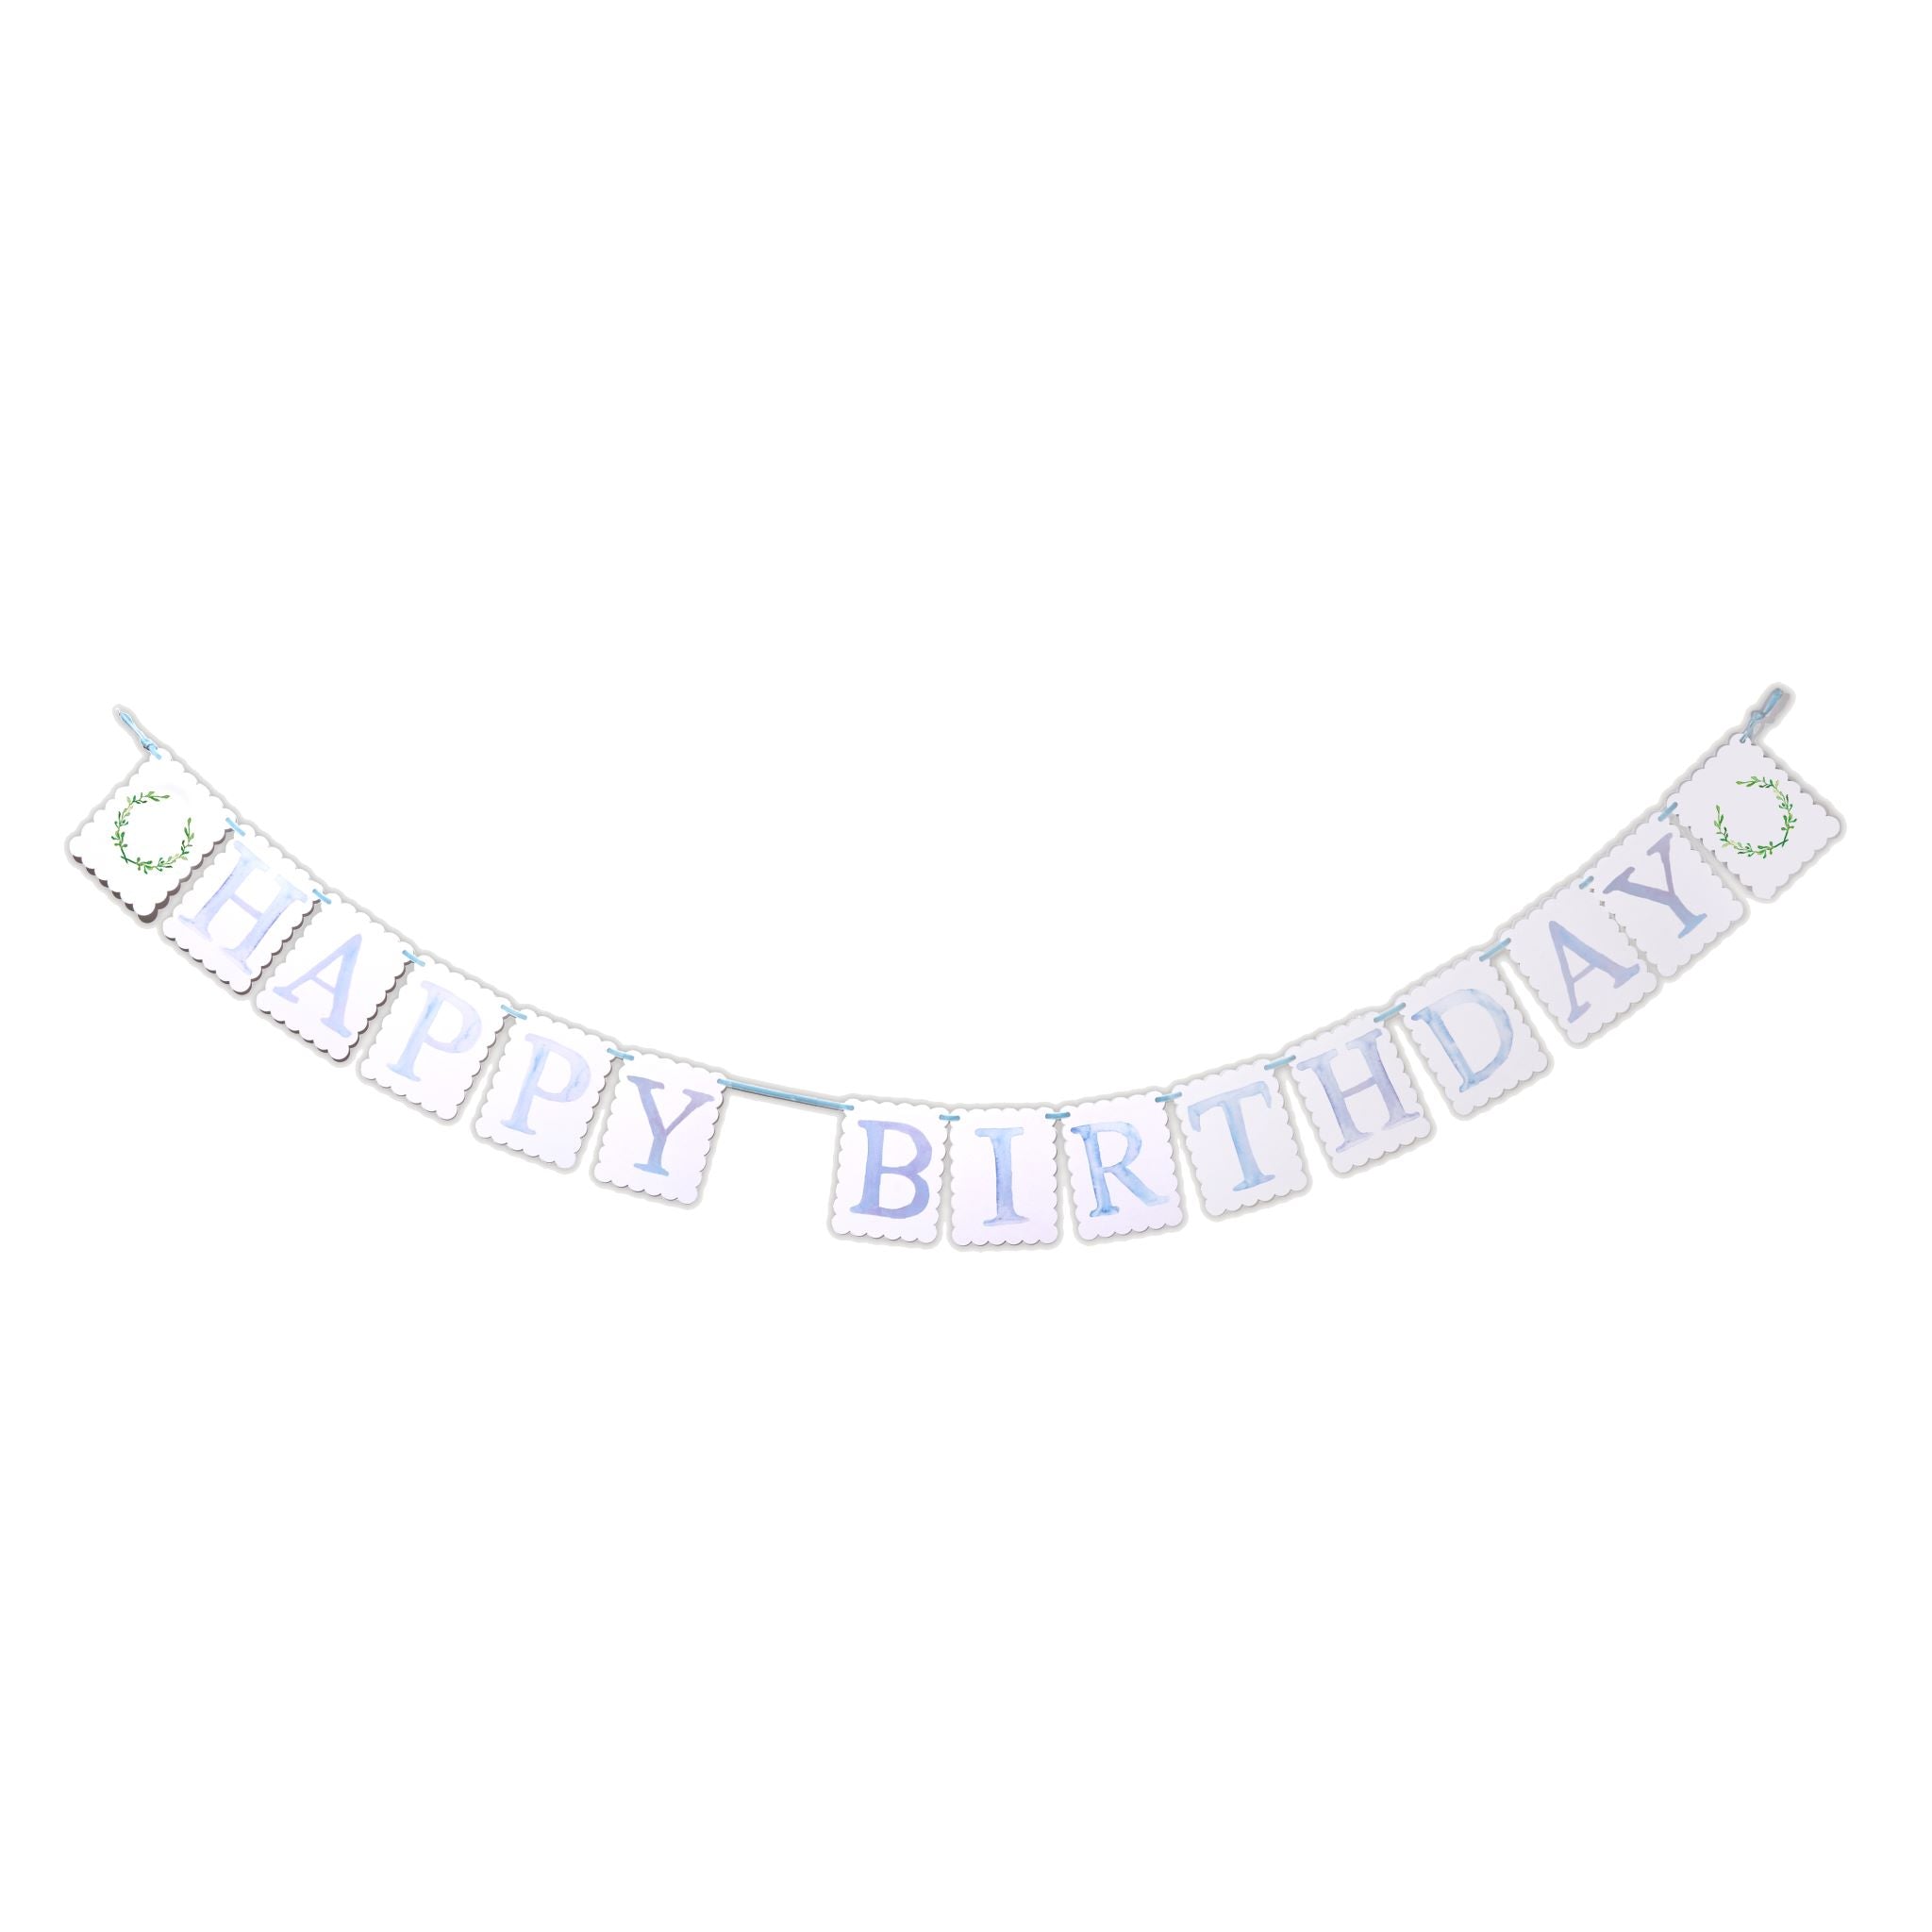 "Happy Birthday" Banner - Wreath